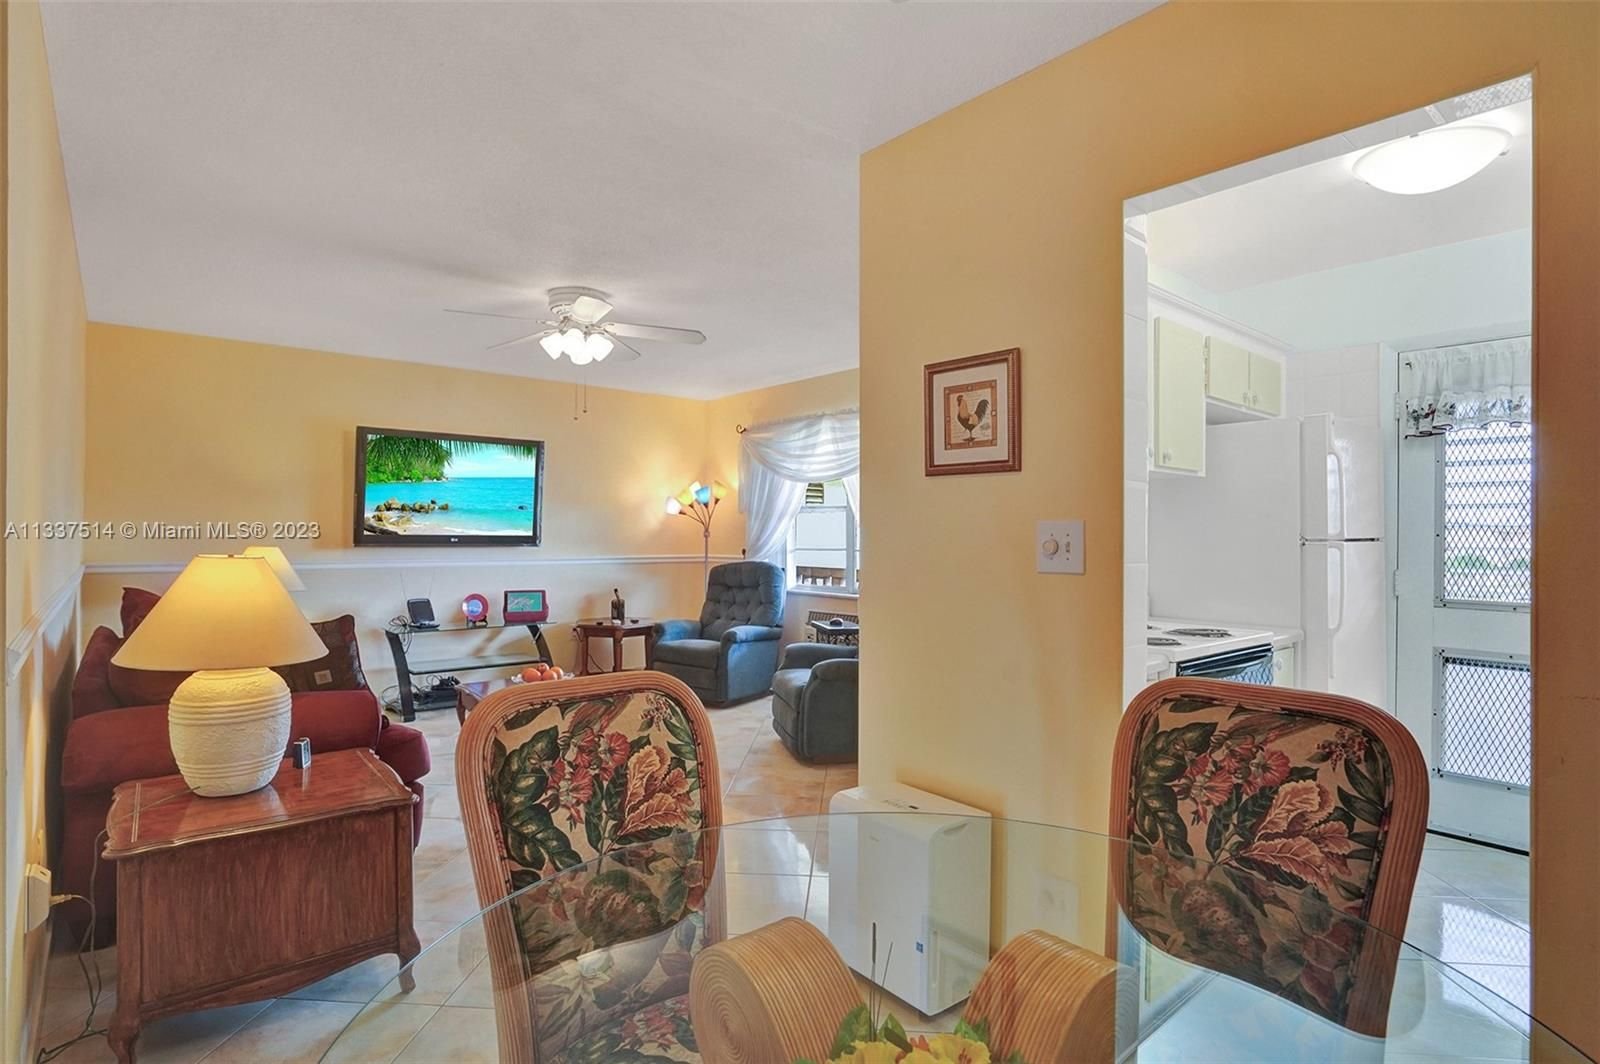 Real estate property located at 16790 14th Ave #306, Miami-Dade County, Miami, FL